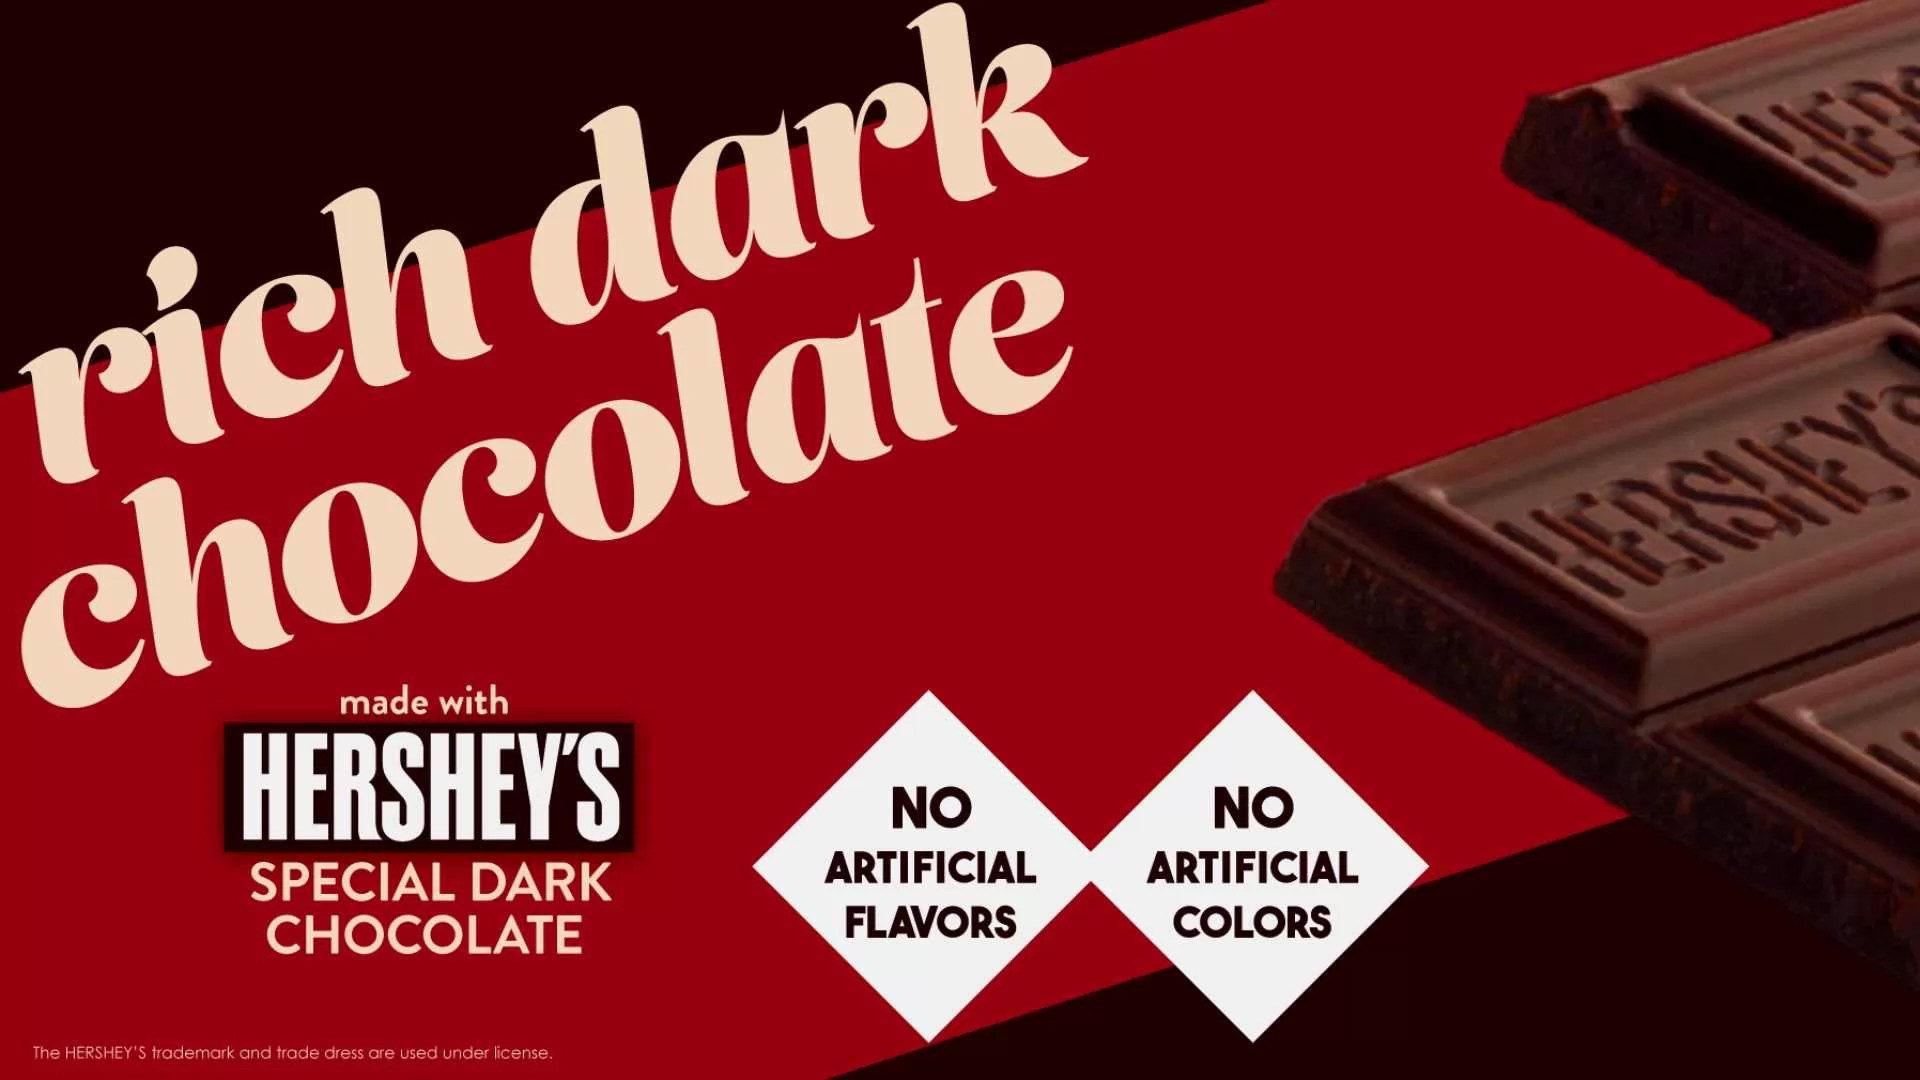 Hershey’s Special Dark Chocolate